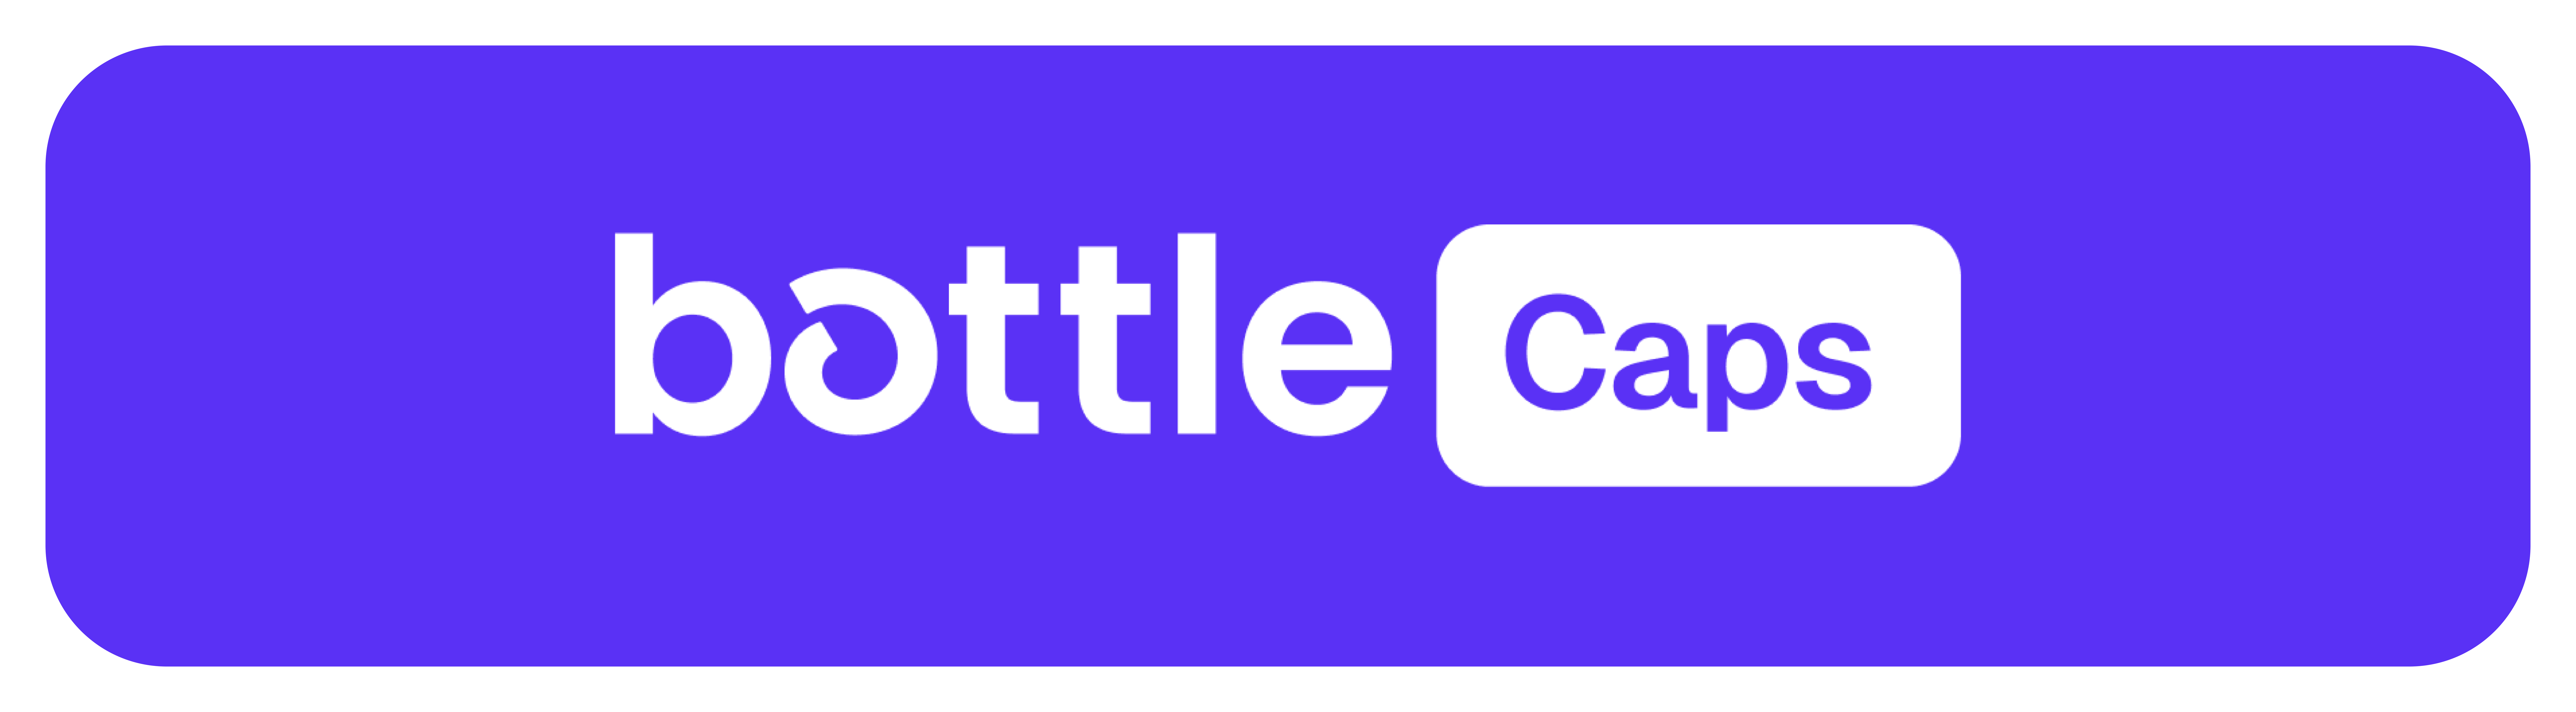 bottle_caps